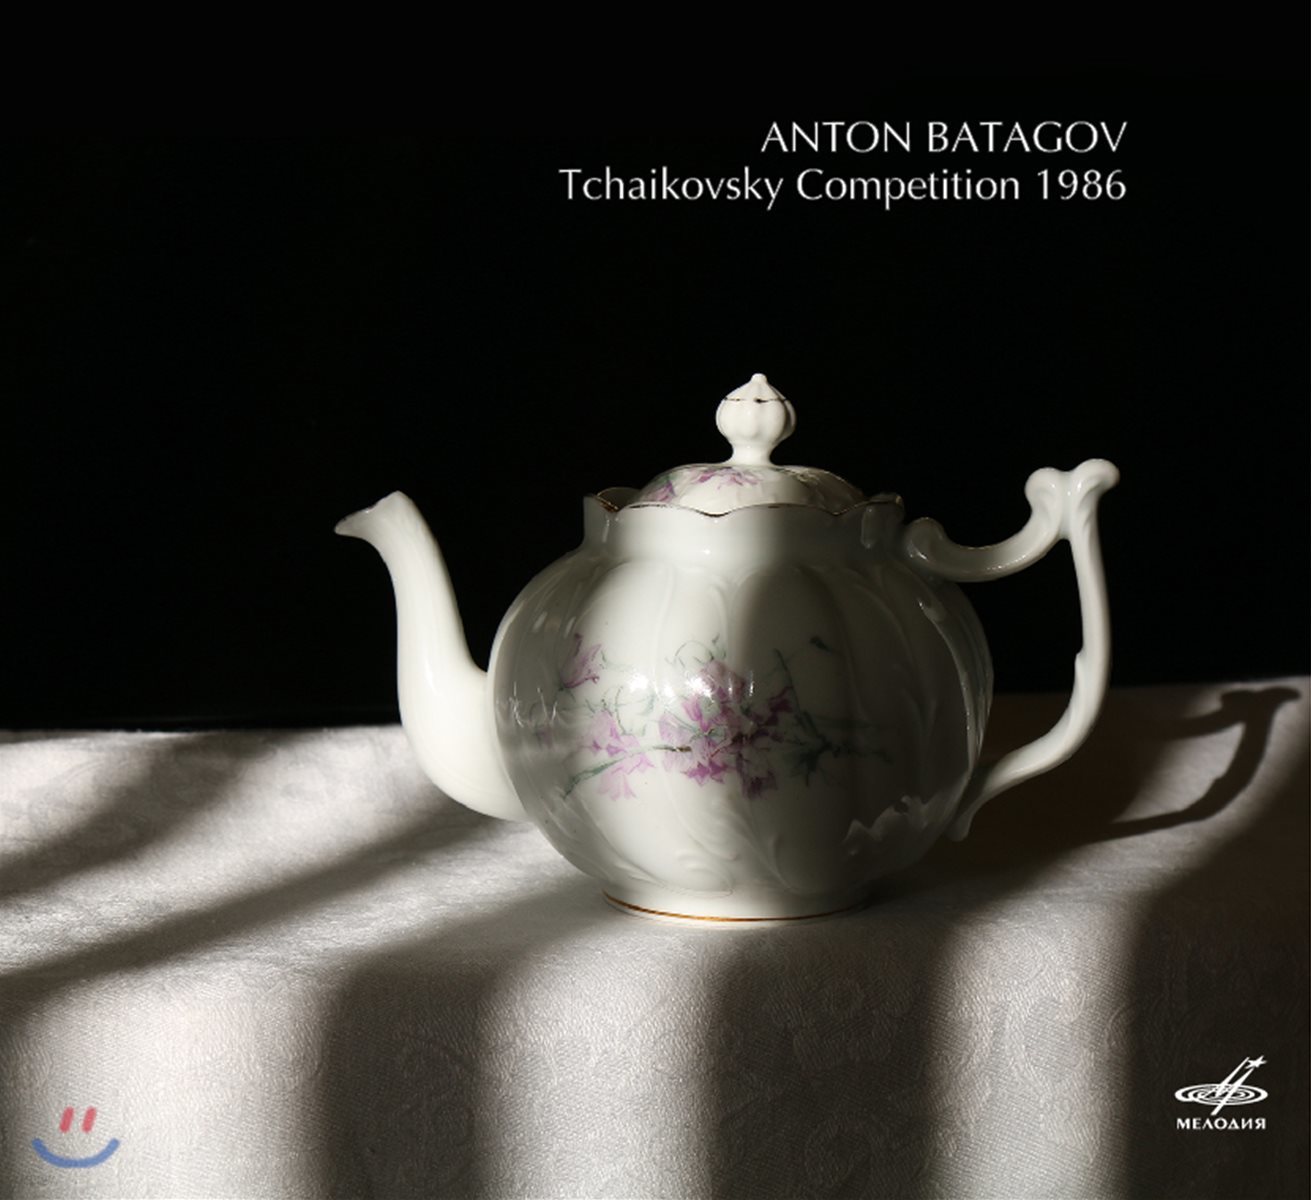 Anton Batagov 안톤 바타고프 - 1986 차이코프스키 콩쿠르 실황 (Tchaikovsky Competition 1986)